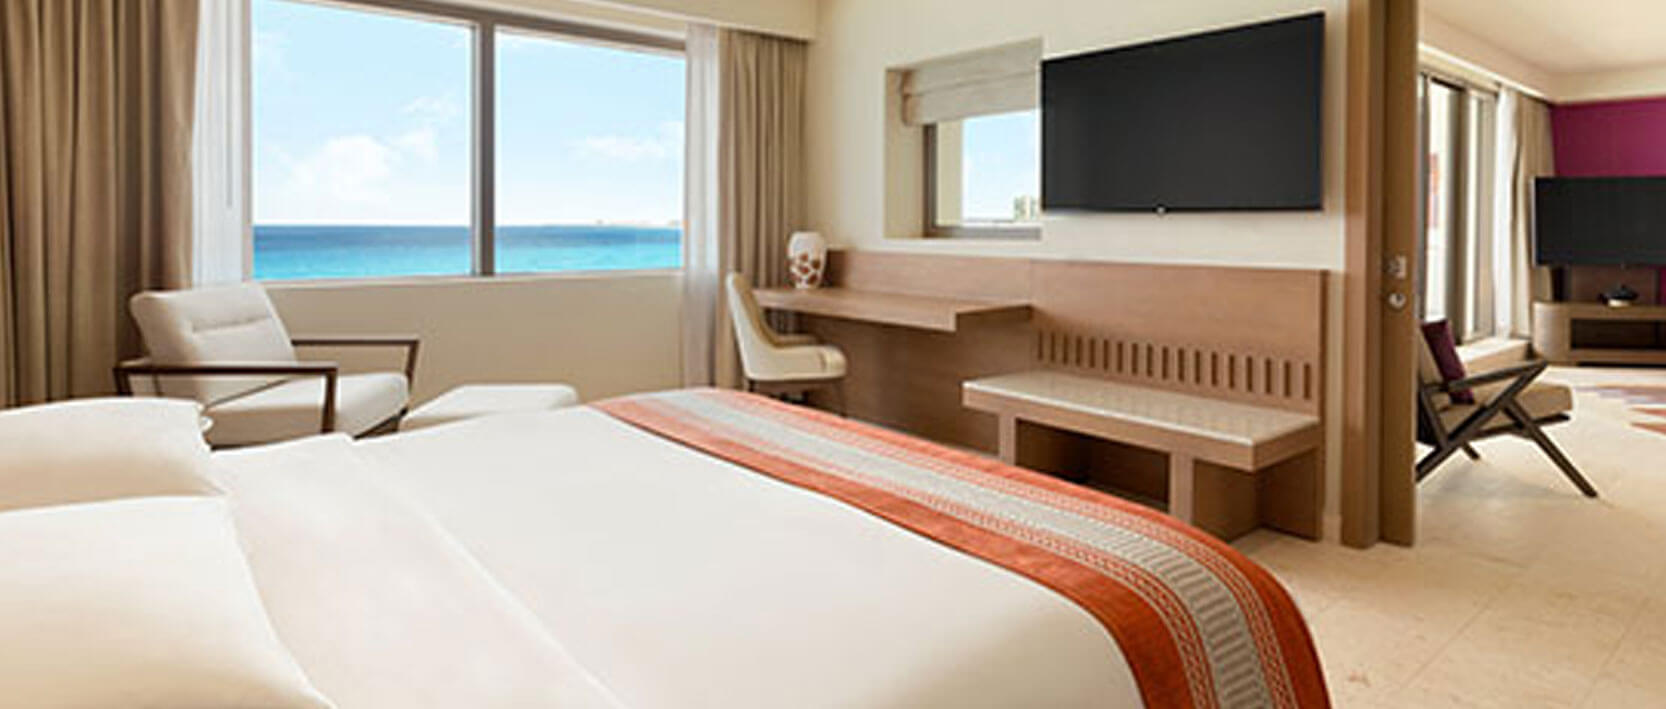 Hyatt Ziva Cancun Accommodations - Club Ocean Front Corner Suite